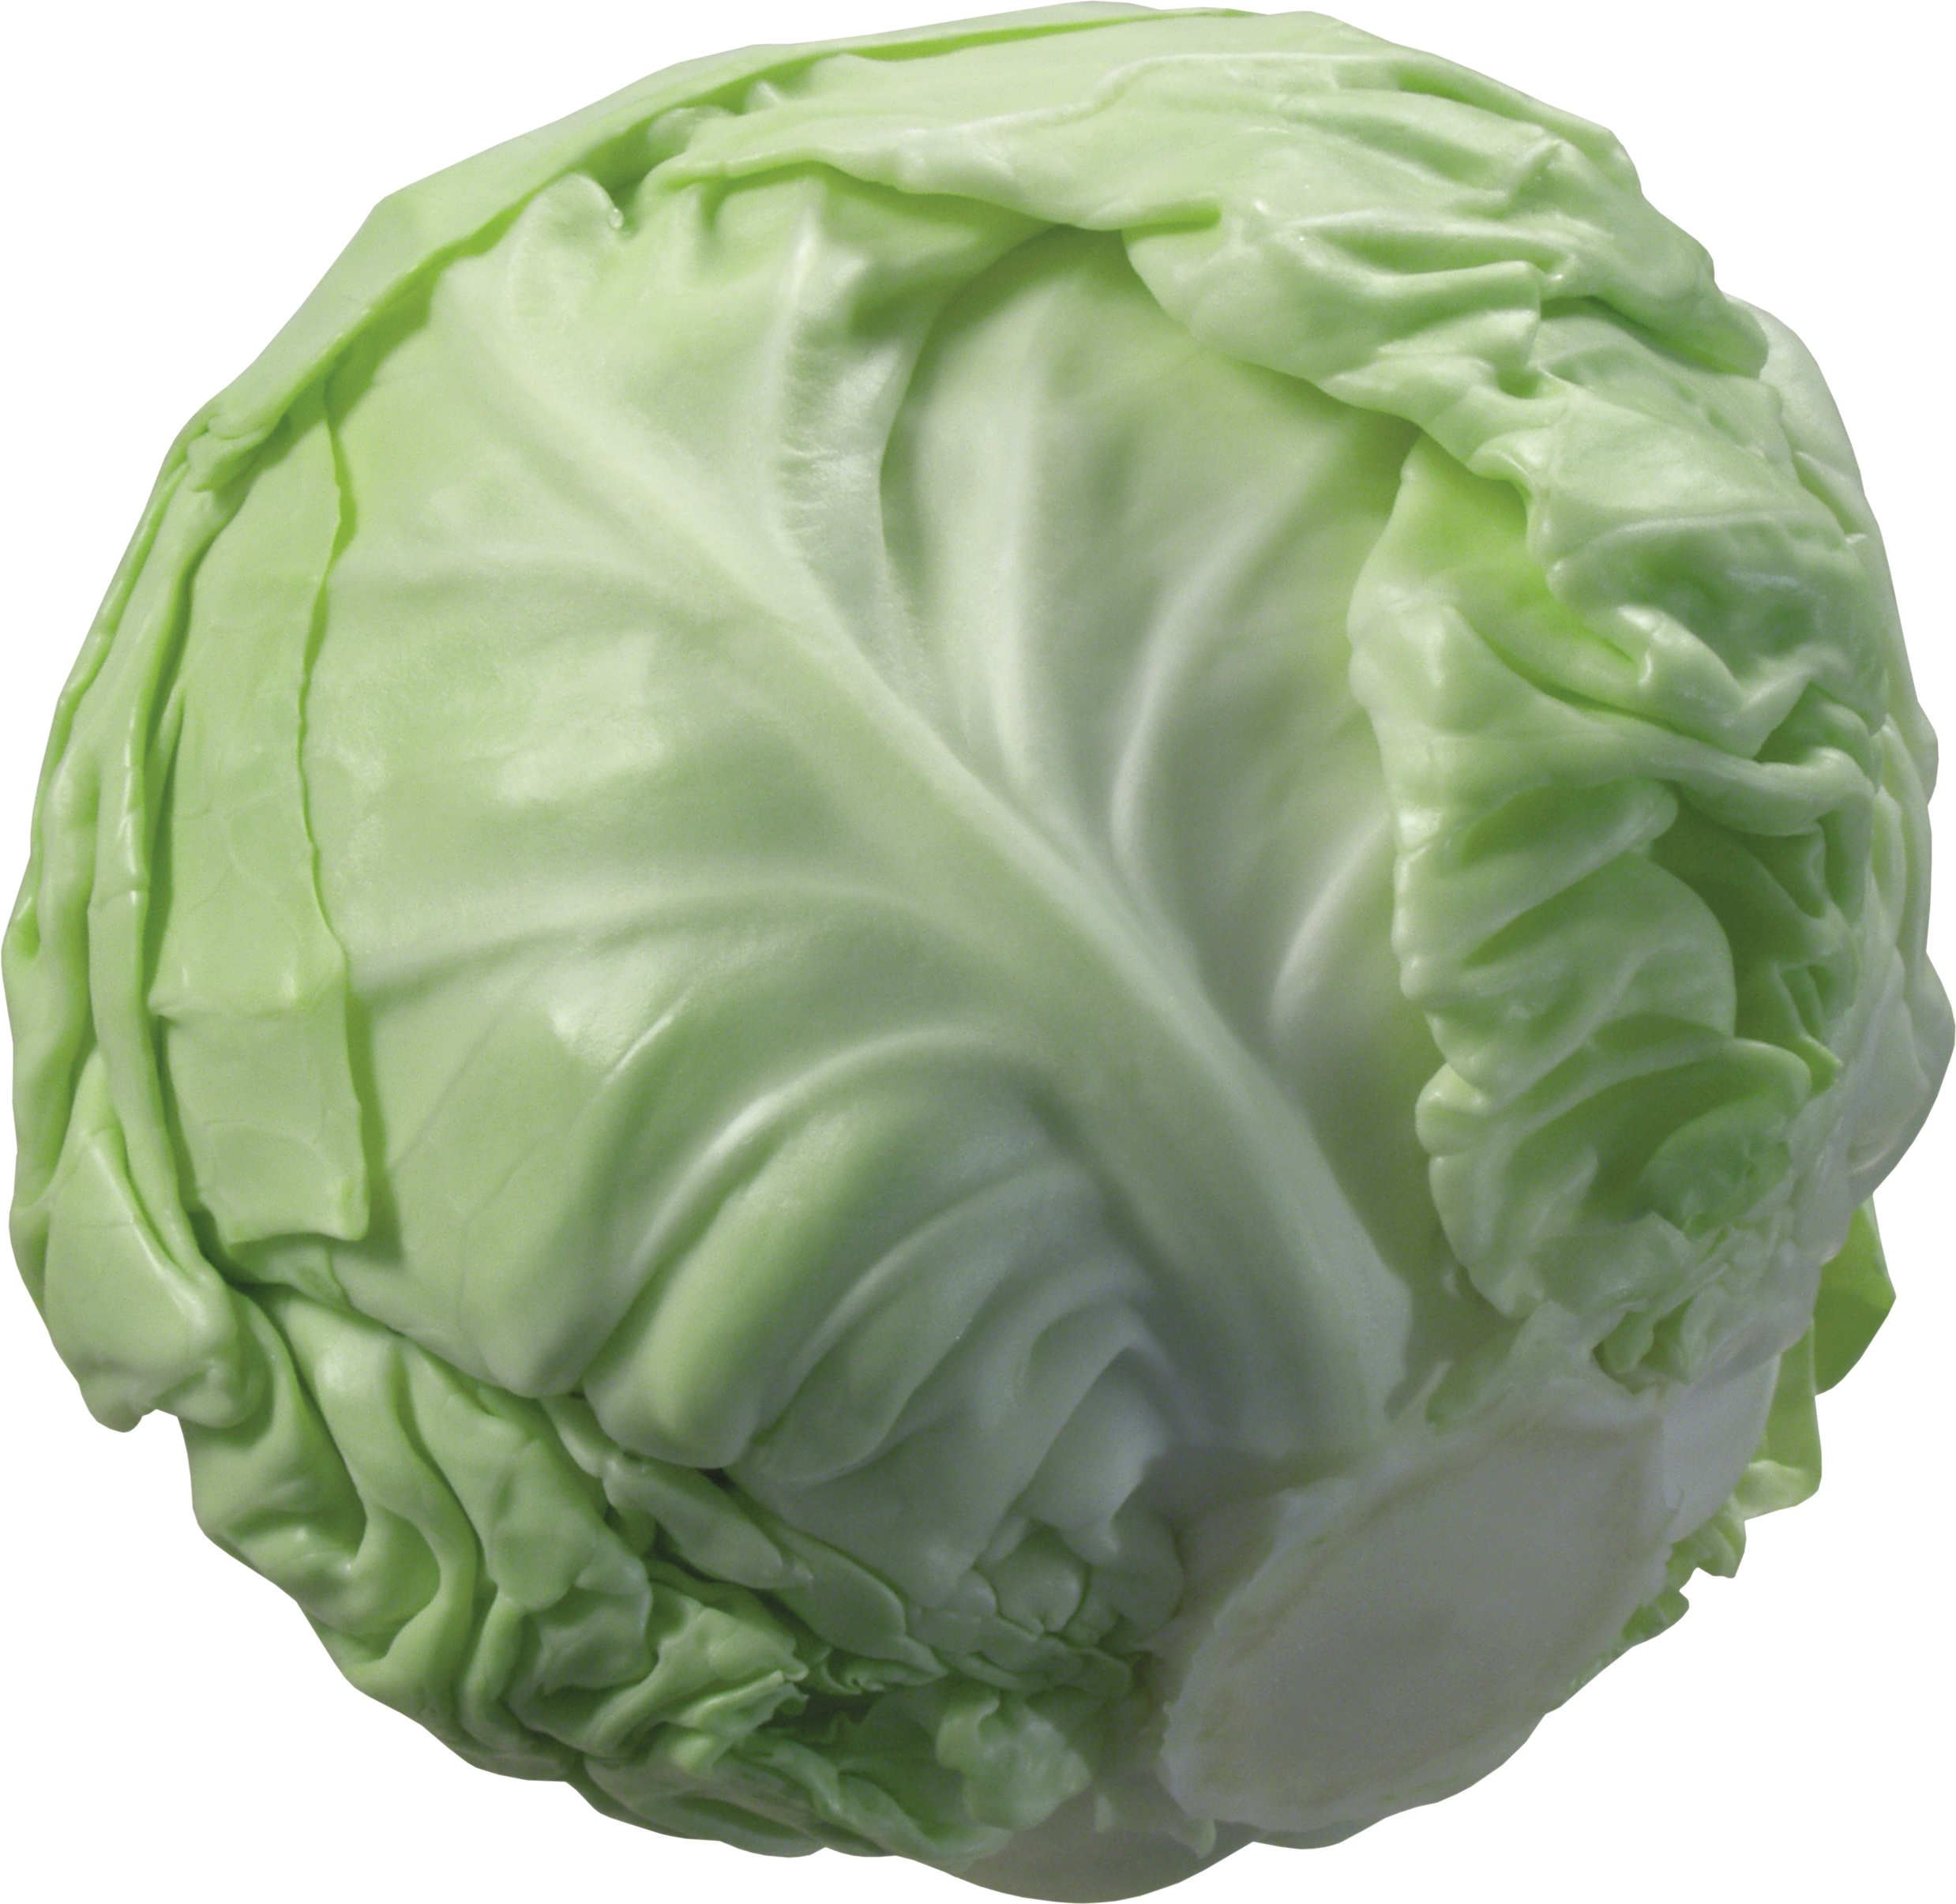 cabbage clipart transparent background